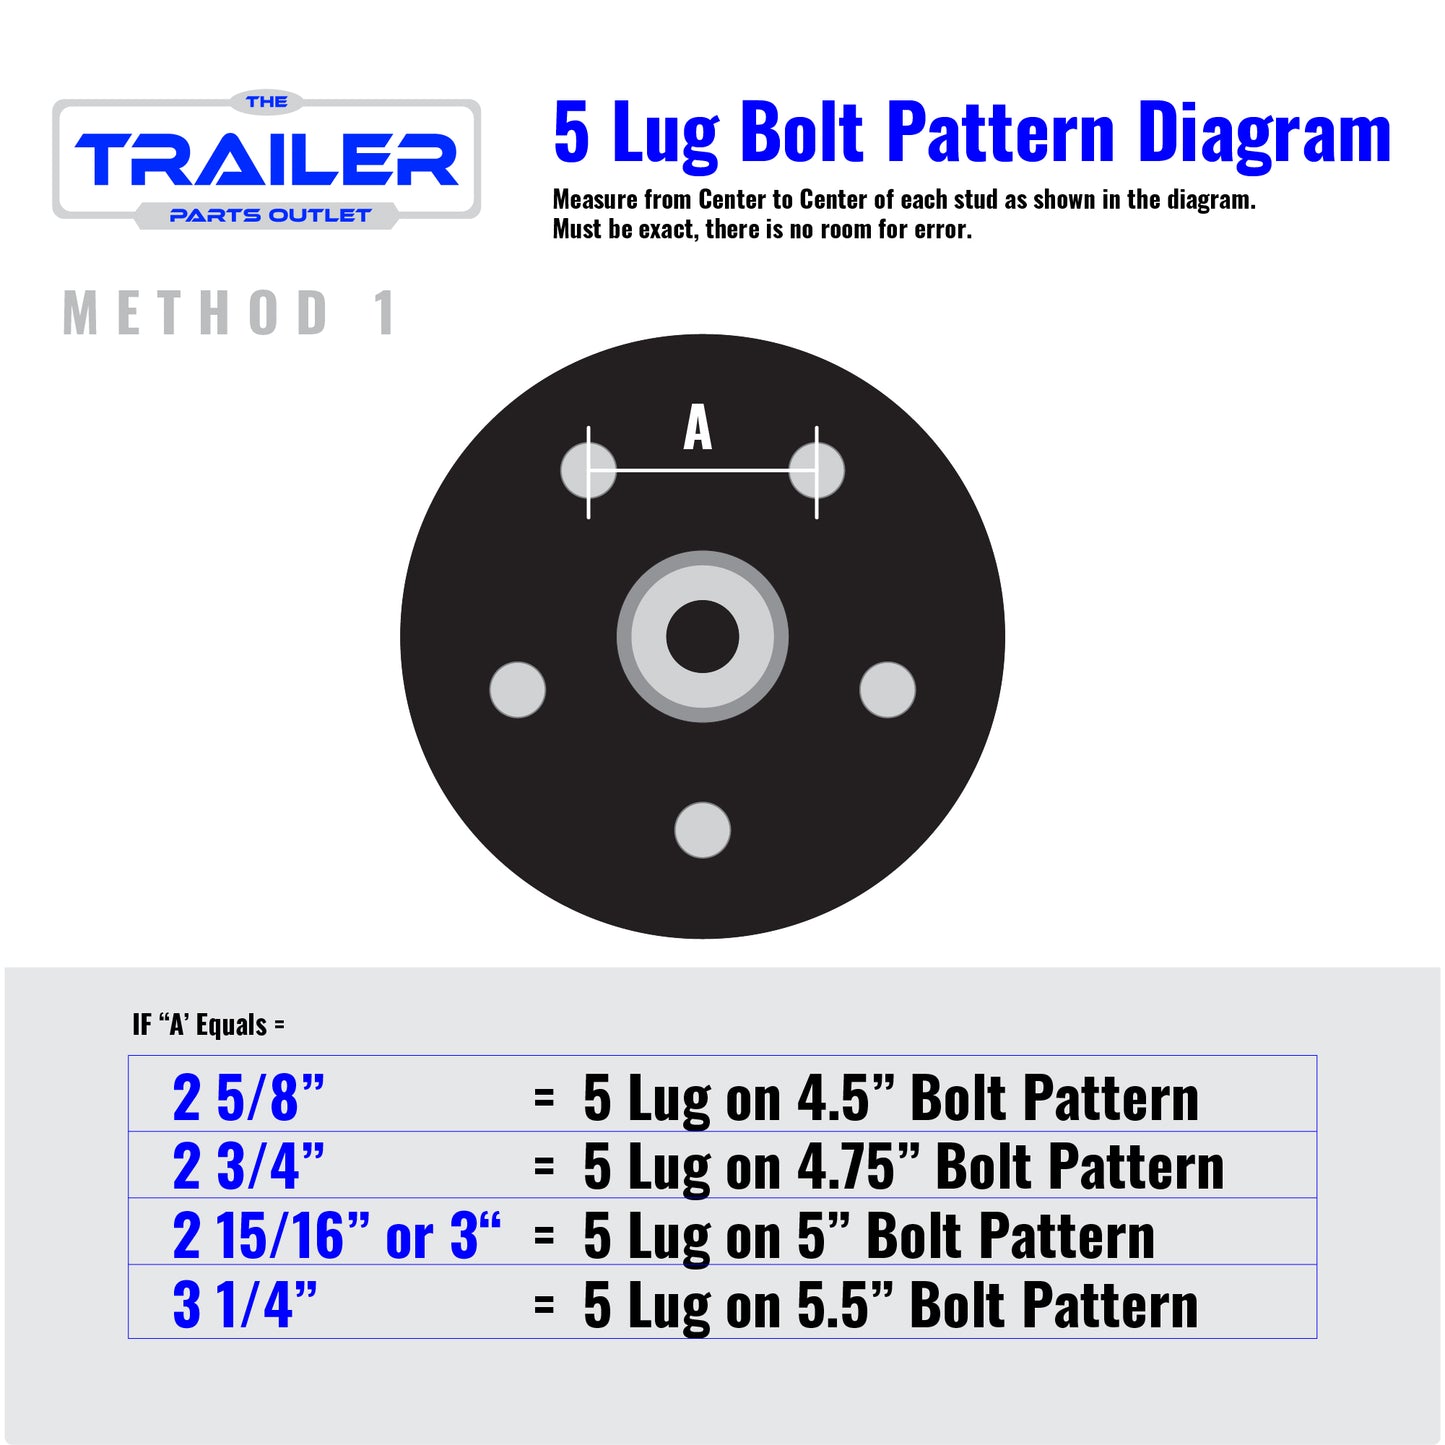 Method 1- 5 Lug Bolt Pattern Diagram